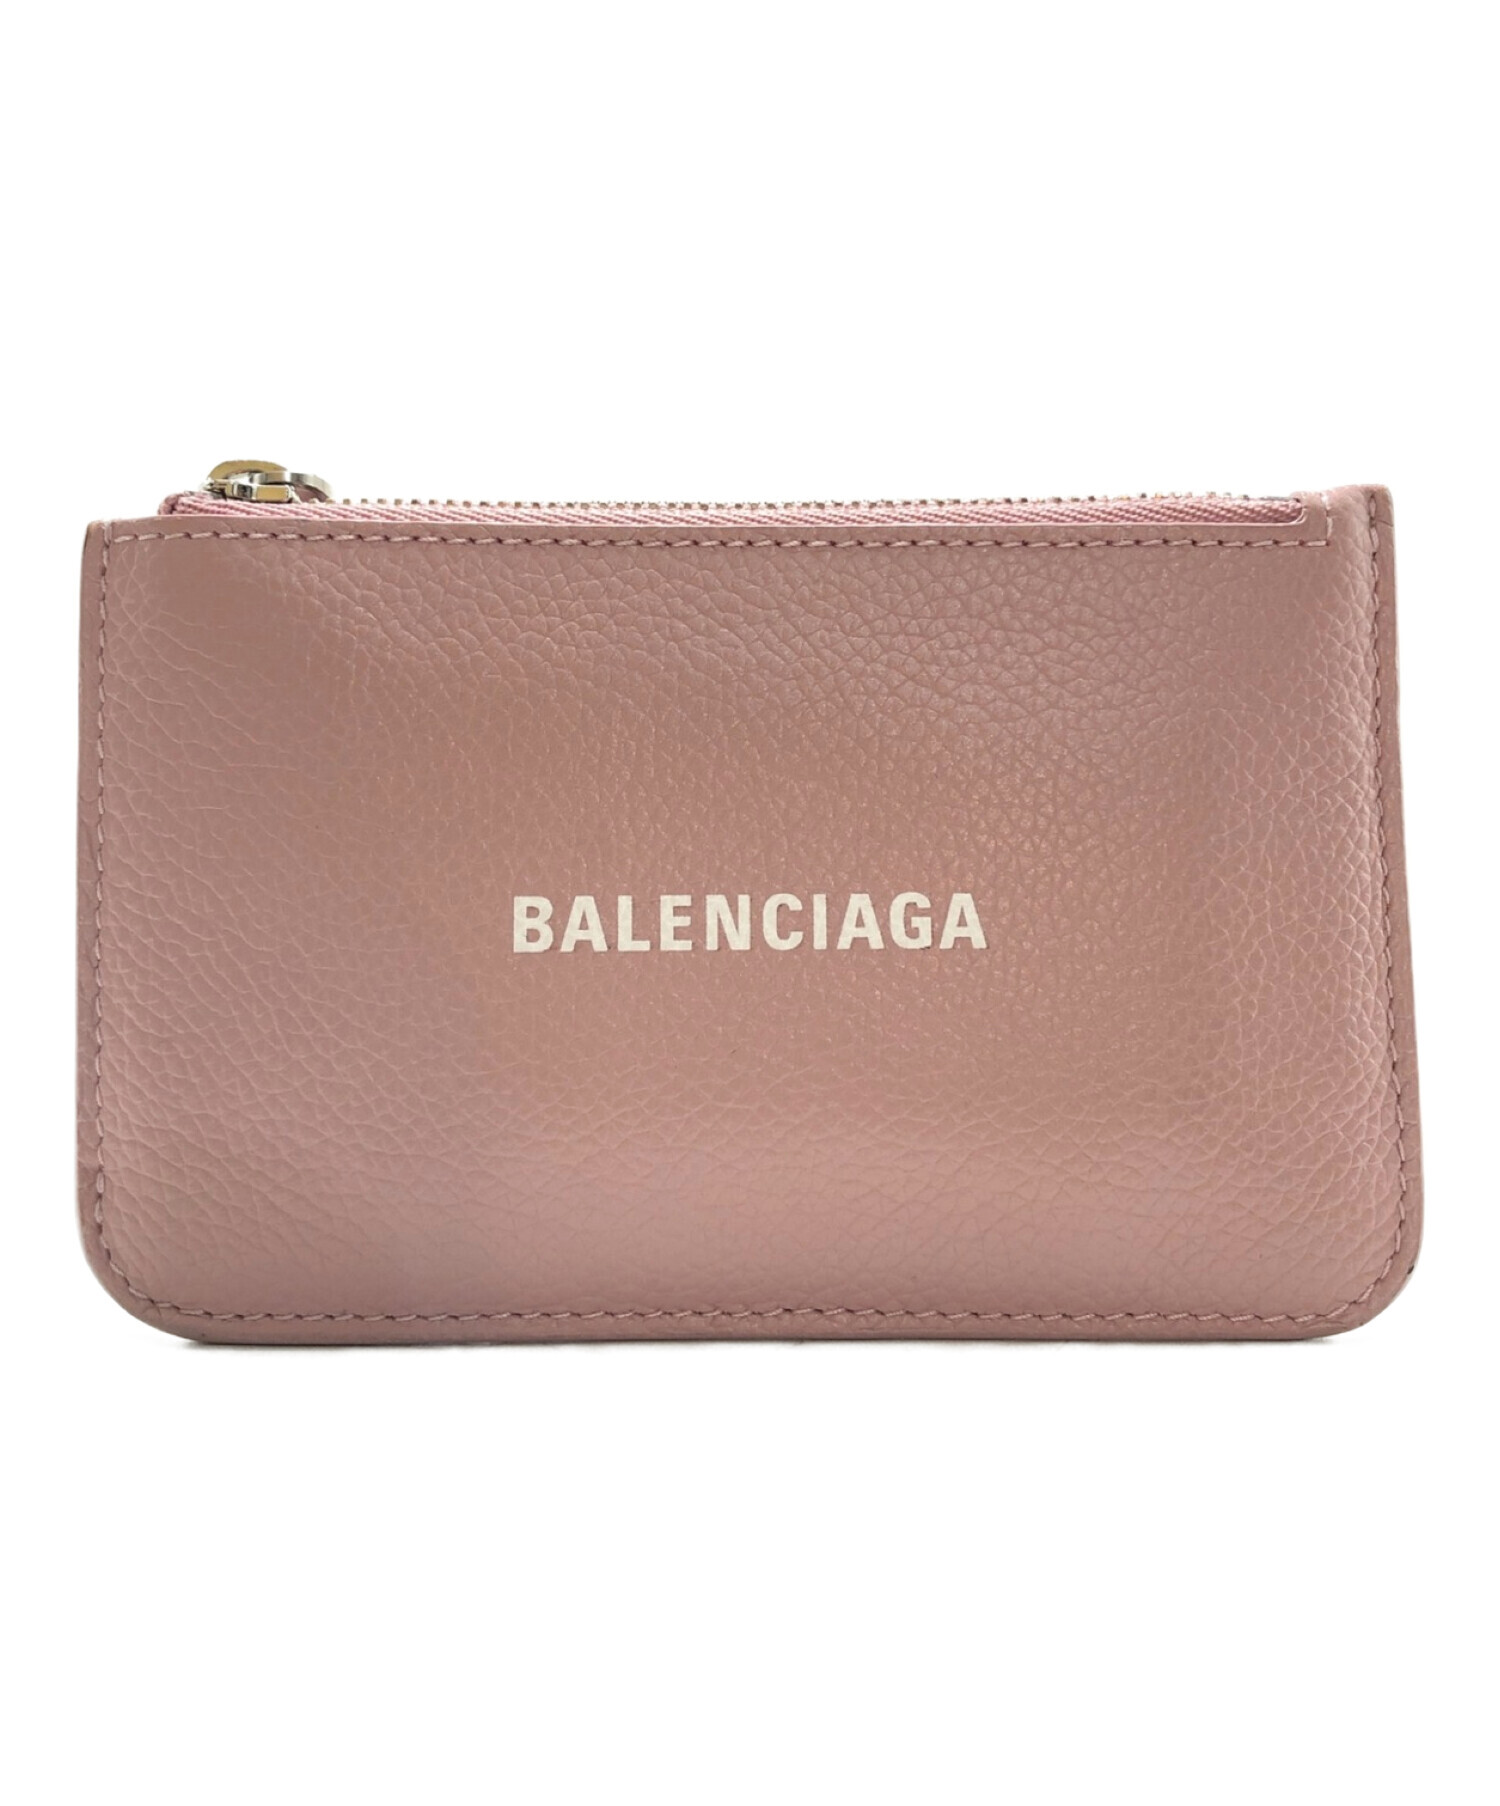 BALENCIAGA (バレンシアガ) カードケース ピンク